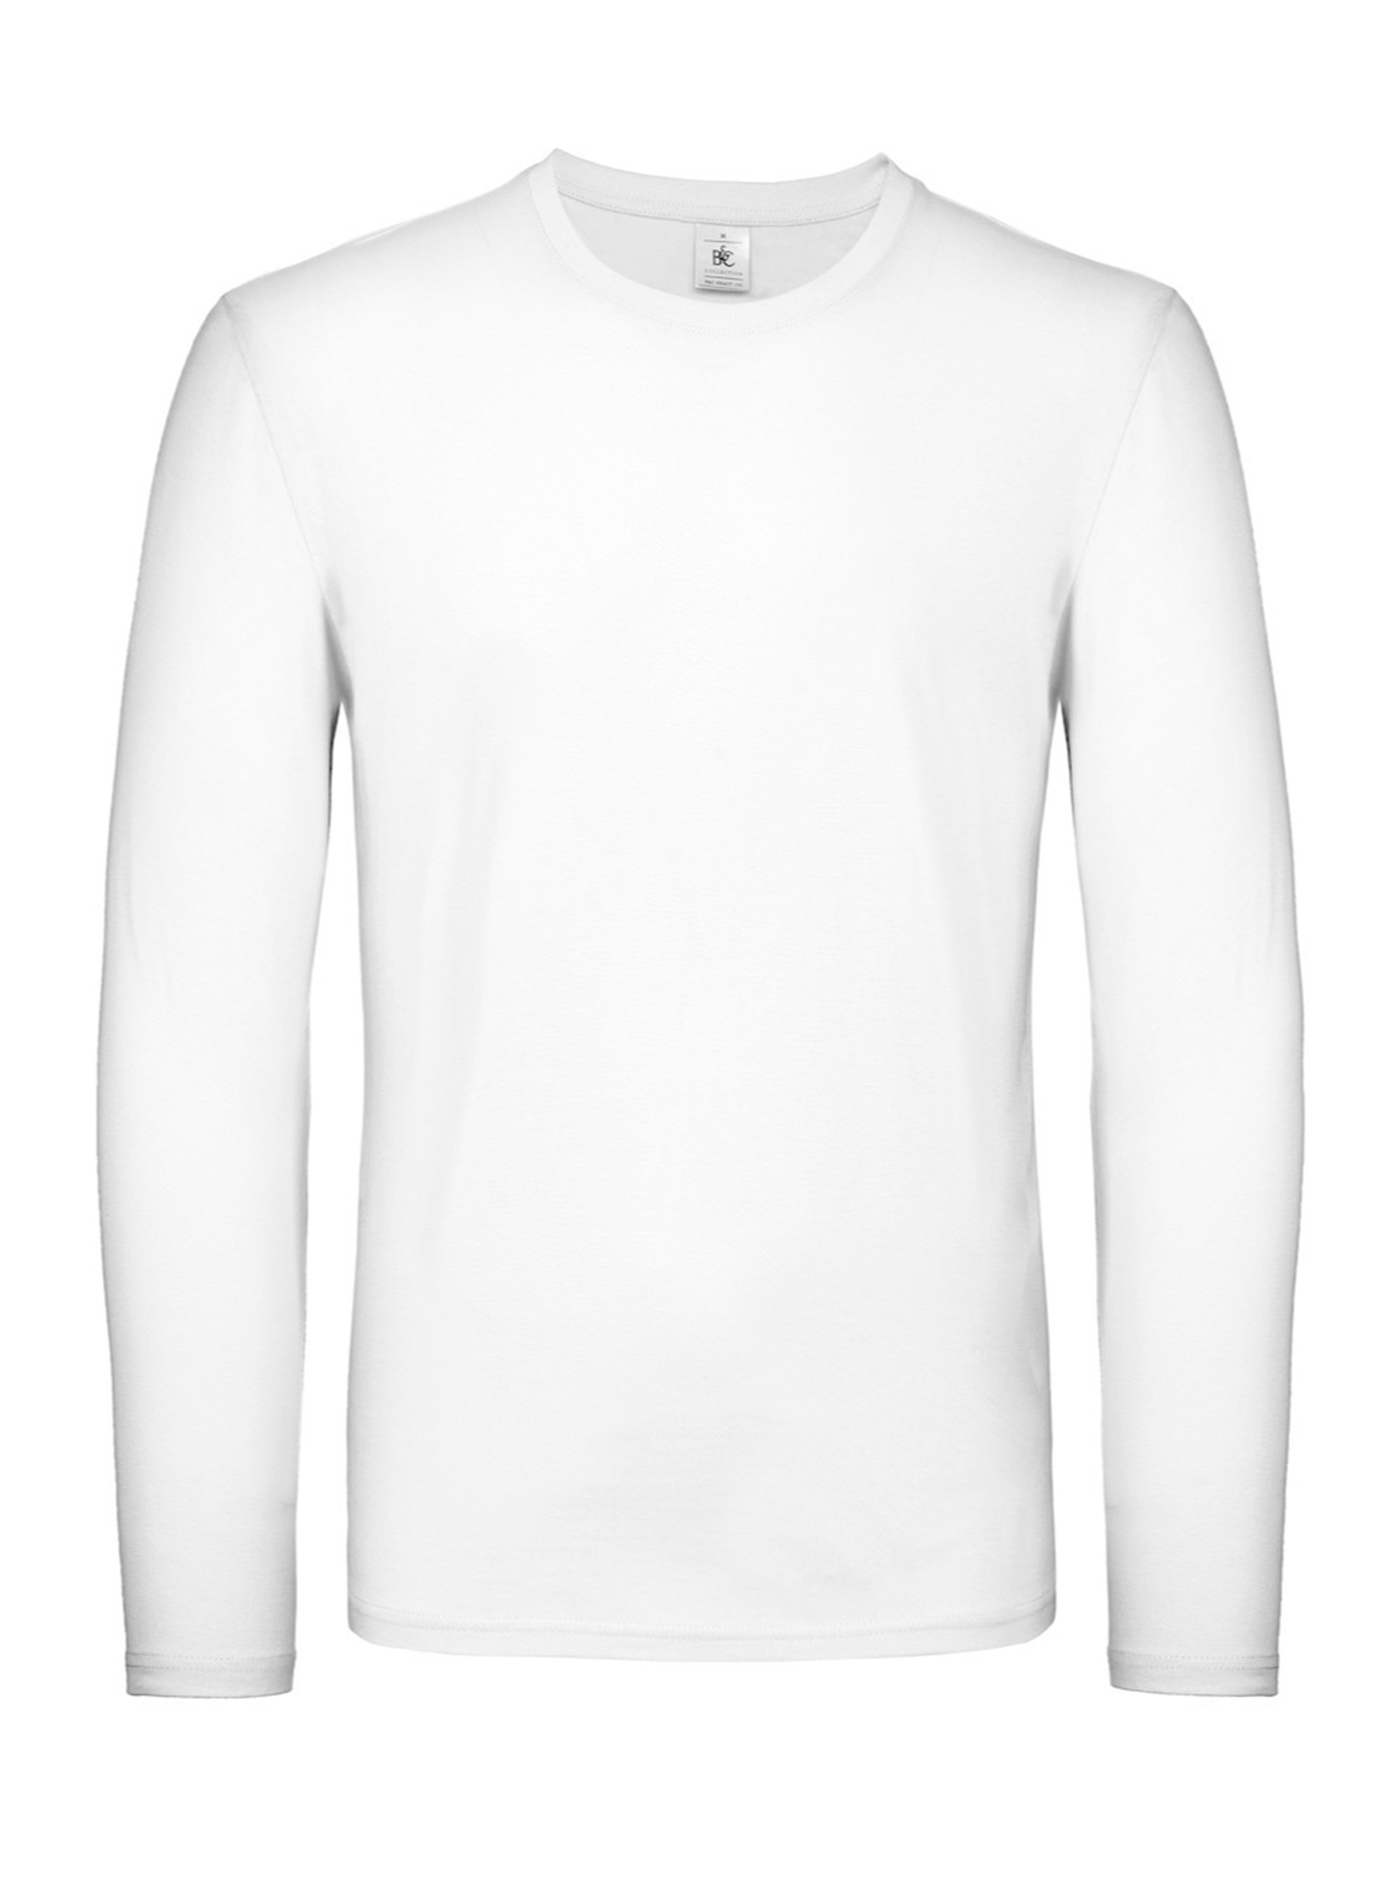 Tričko s dlouhým rukávem B&C Collection - Bílá 4XL